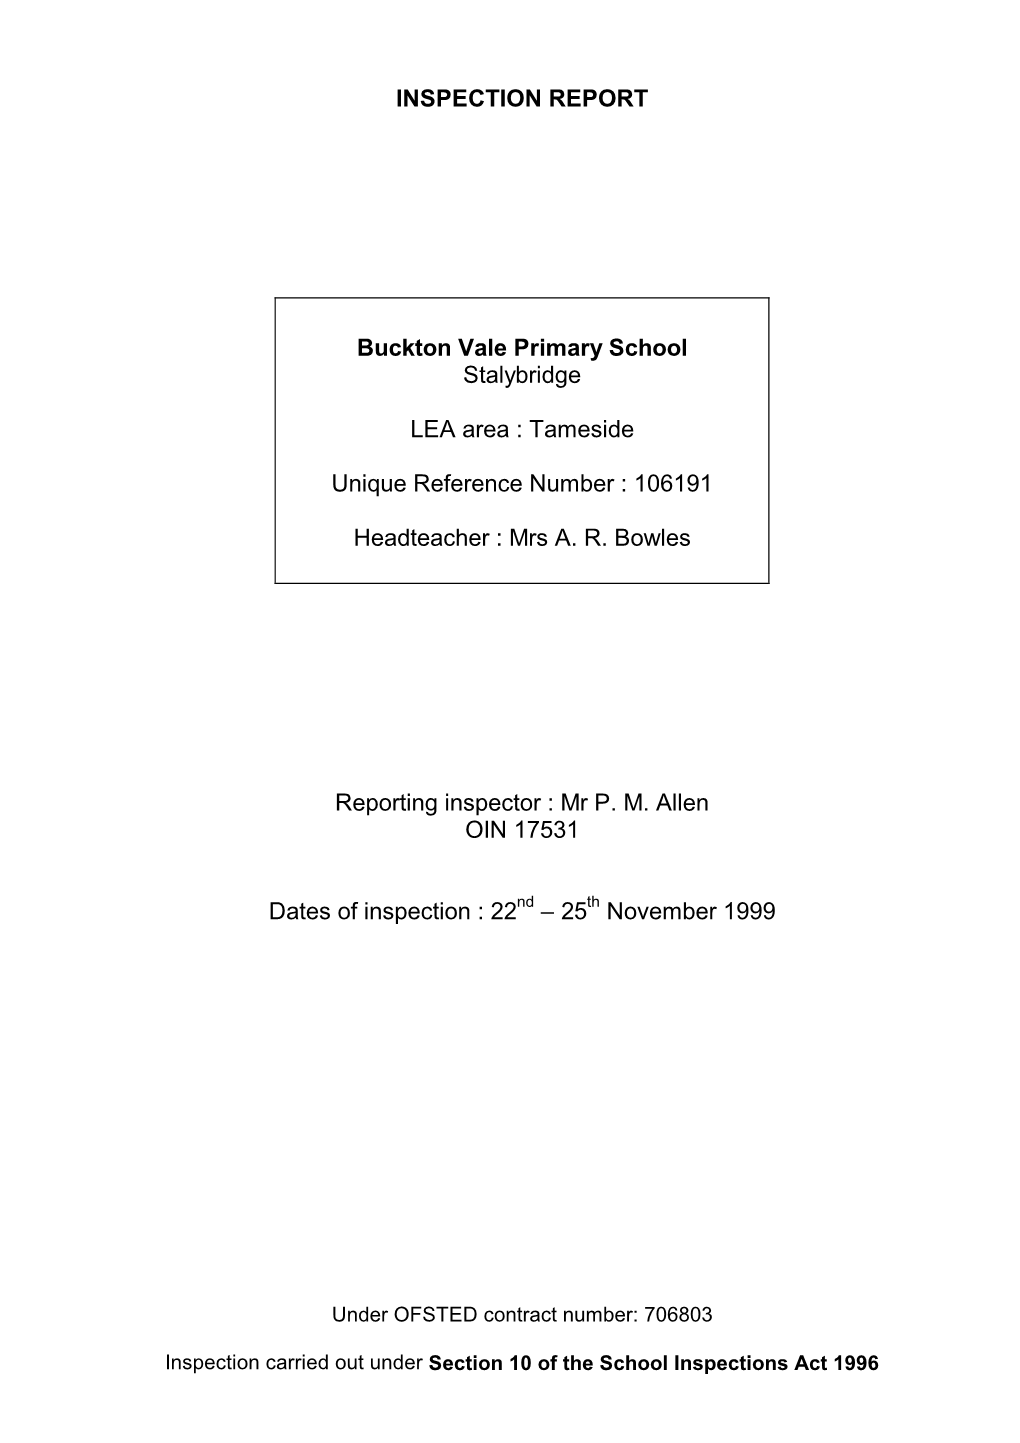 INSPECTION REPORT Buckton Vale Primary School Stalybridge LEA Area